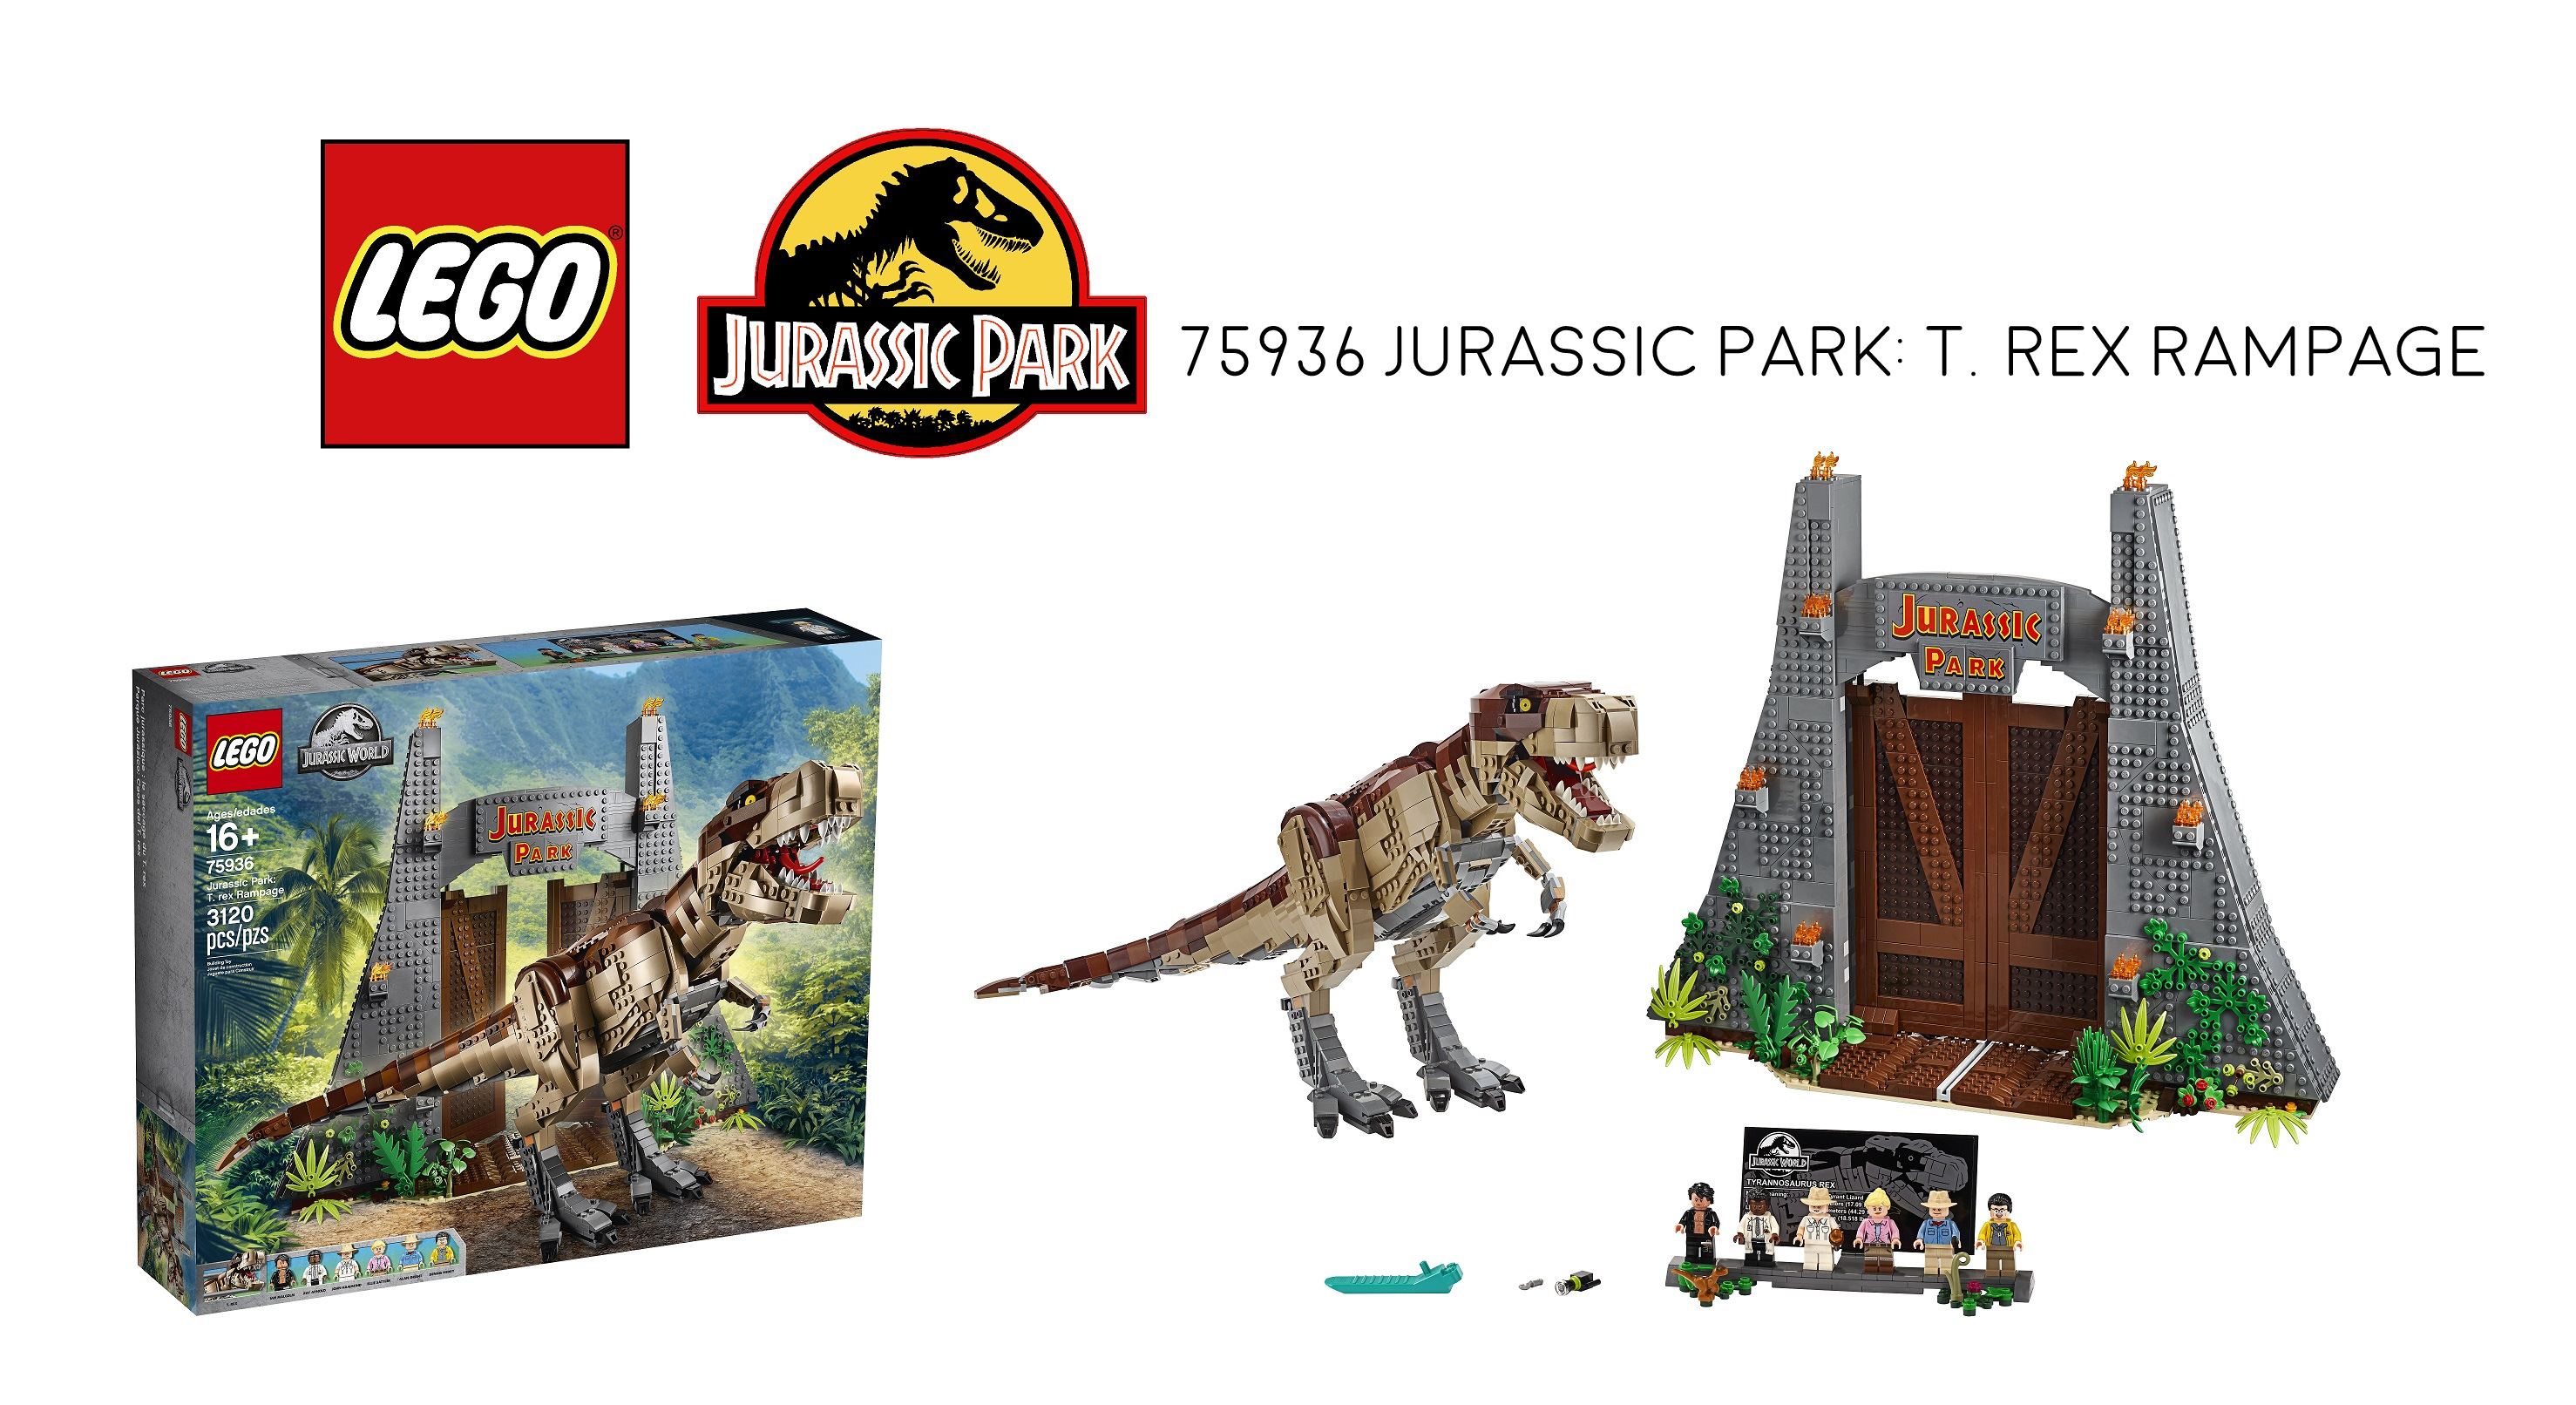 Rex Rampage 3120 Pieces Compatible Jurassic World Jurassic Park T 